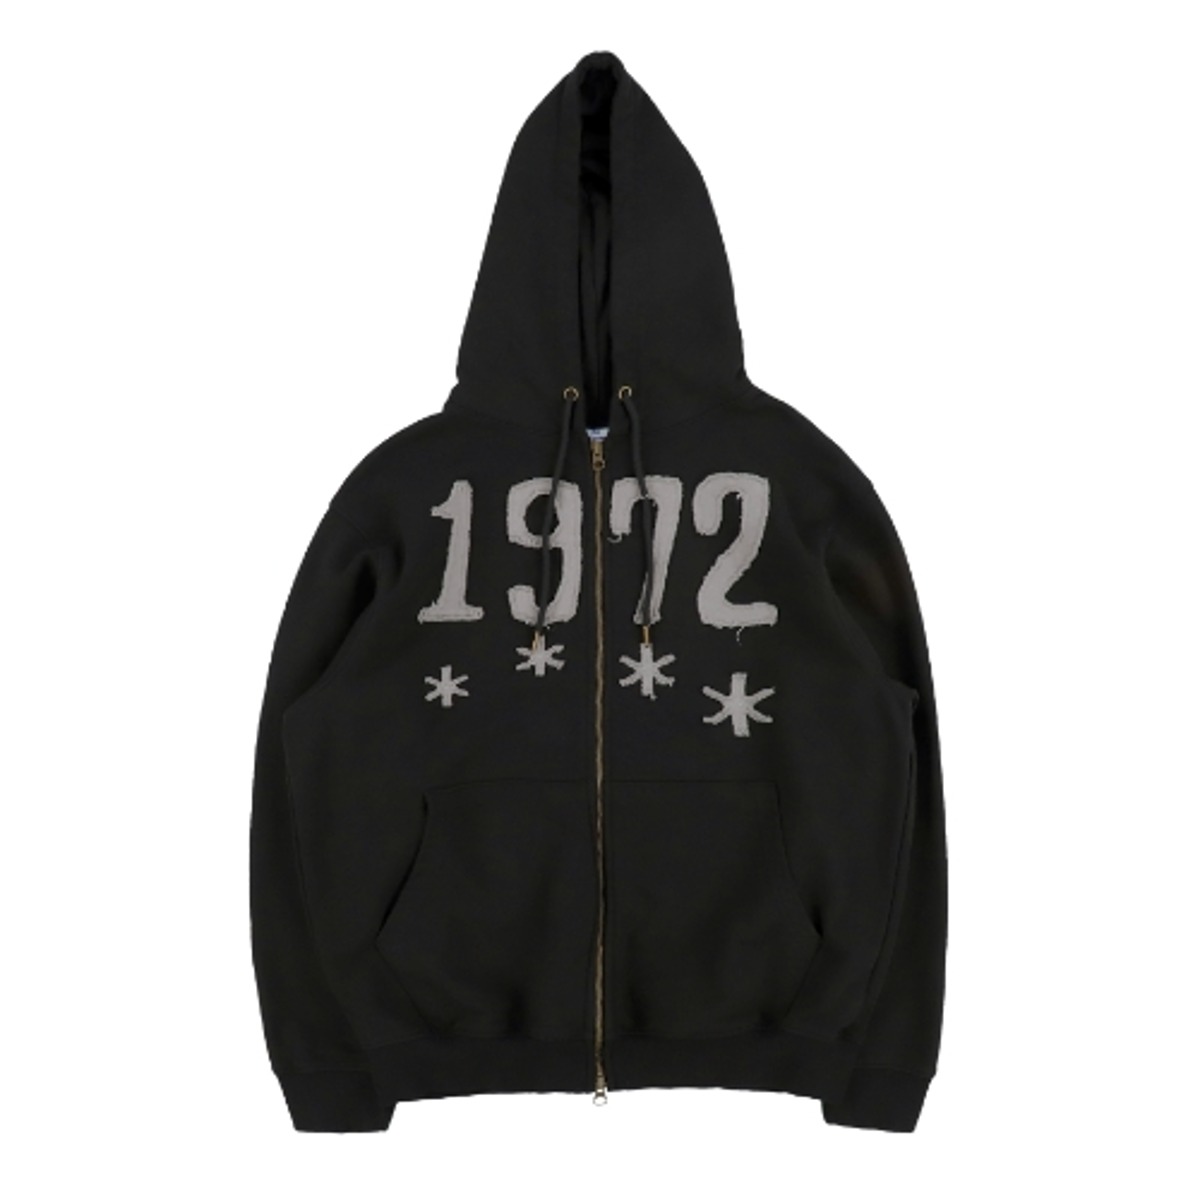 TCM 1972 hooded zip-up (black)